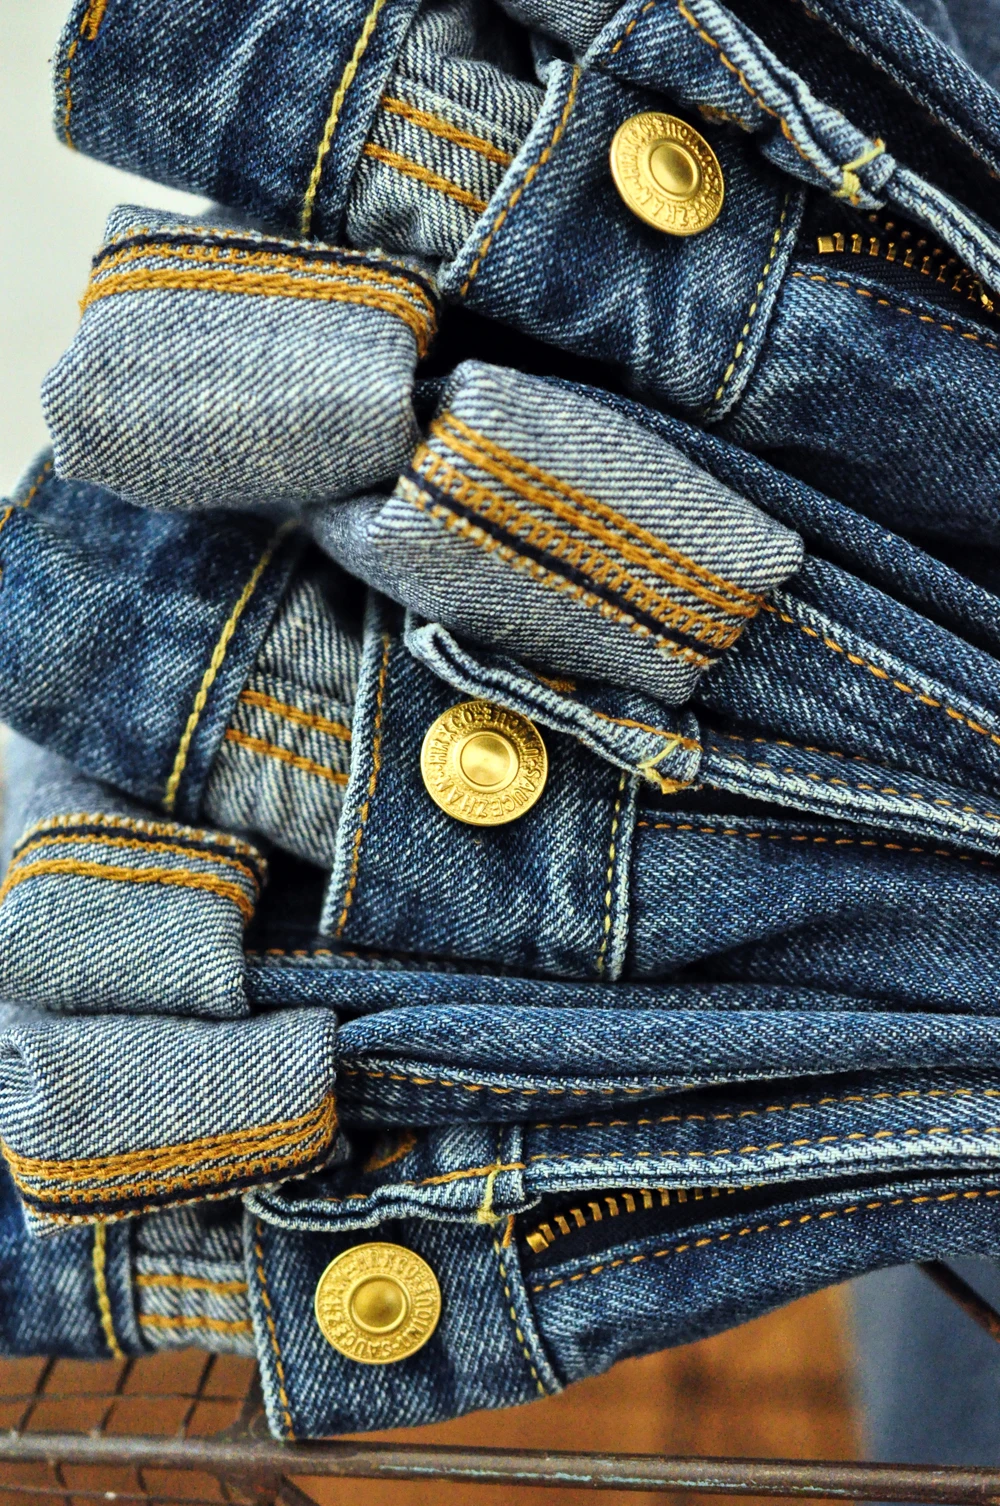 SAUCE ZHAN EX314XX Mens Jeans Distressed Wash Jeans for Man Selvedge Denim Jeans Men Slim Fit 13 Oz